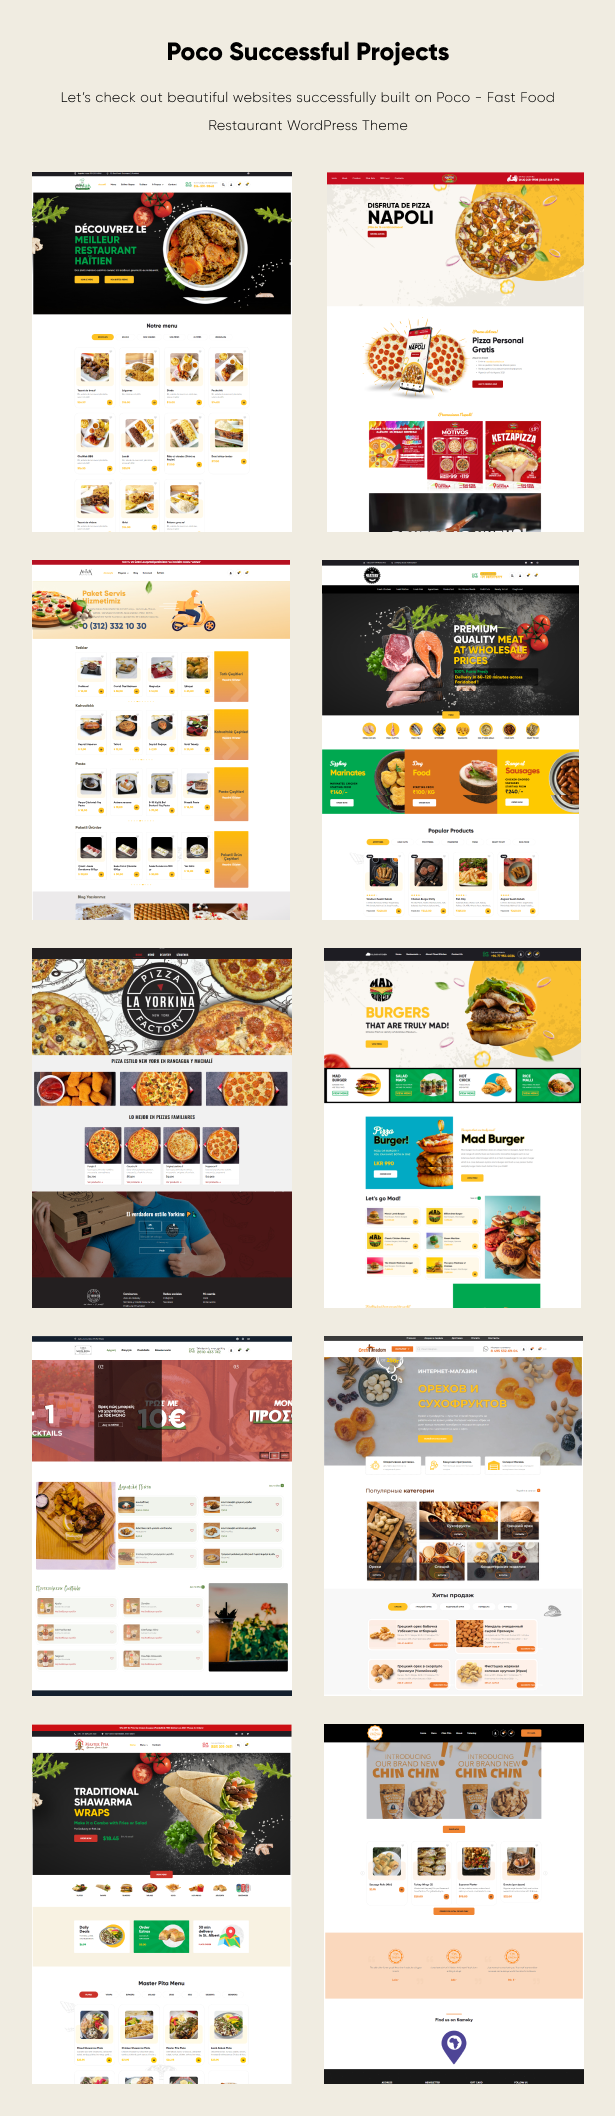 Poco - Fast Food Restaurant WordPress Theme - Successful Projects